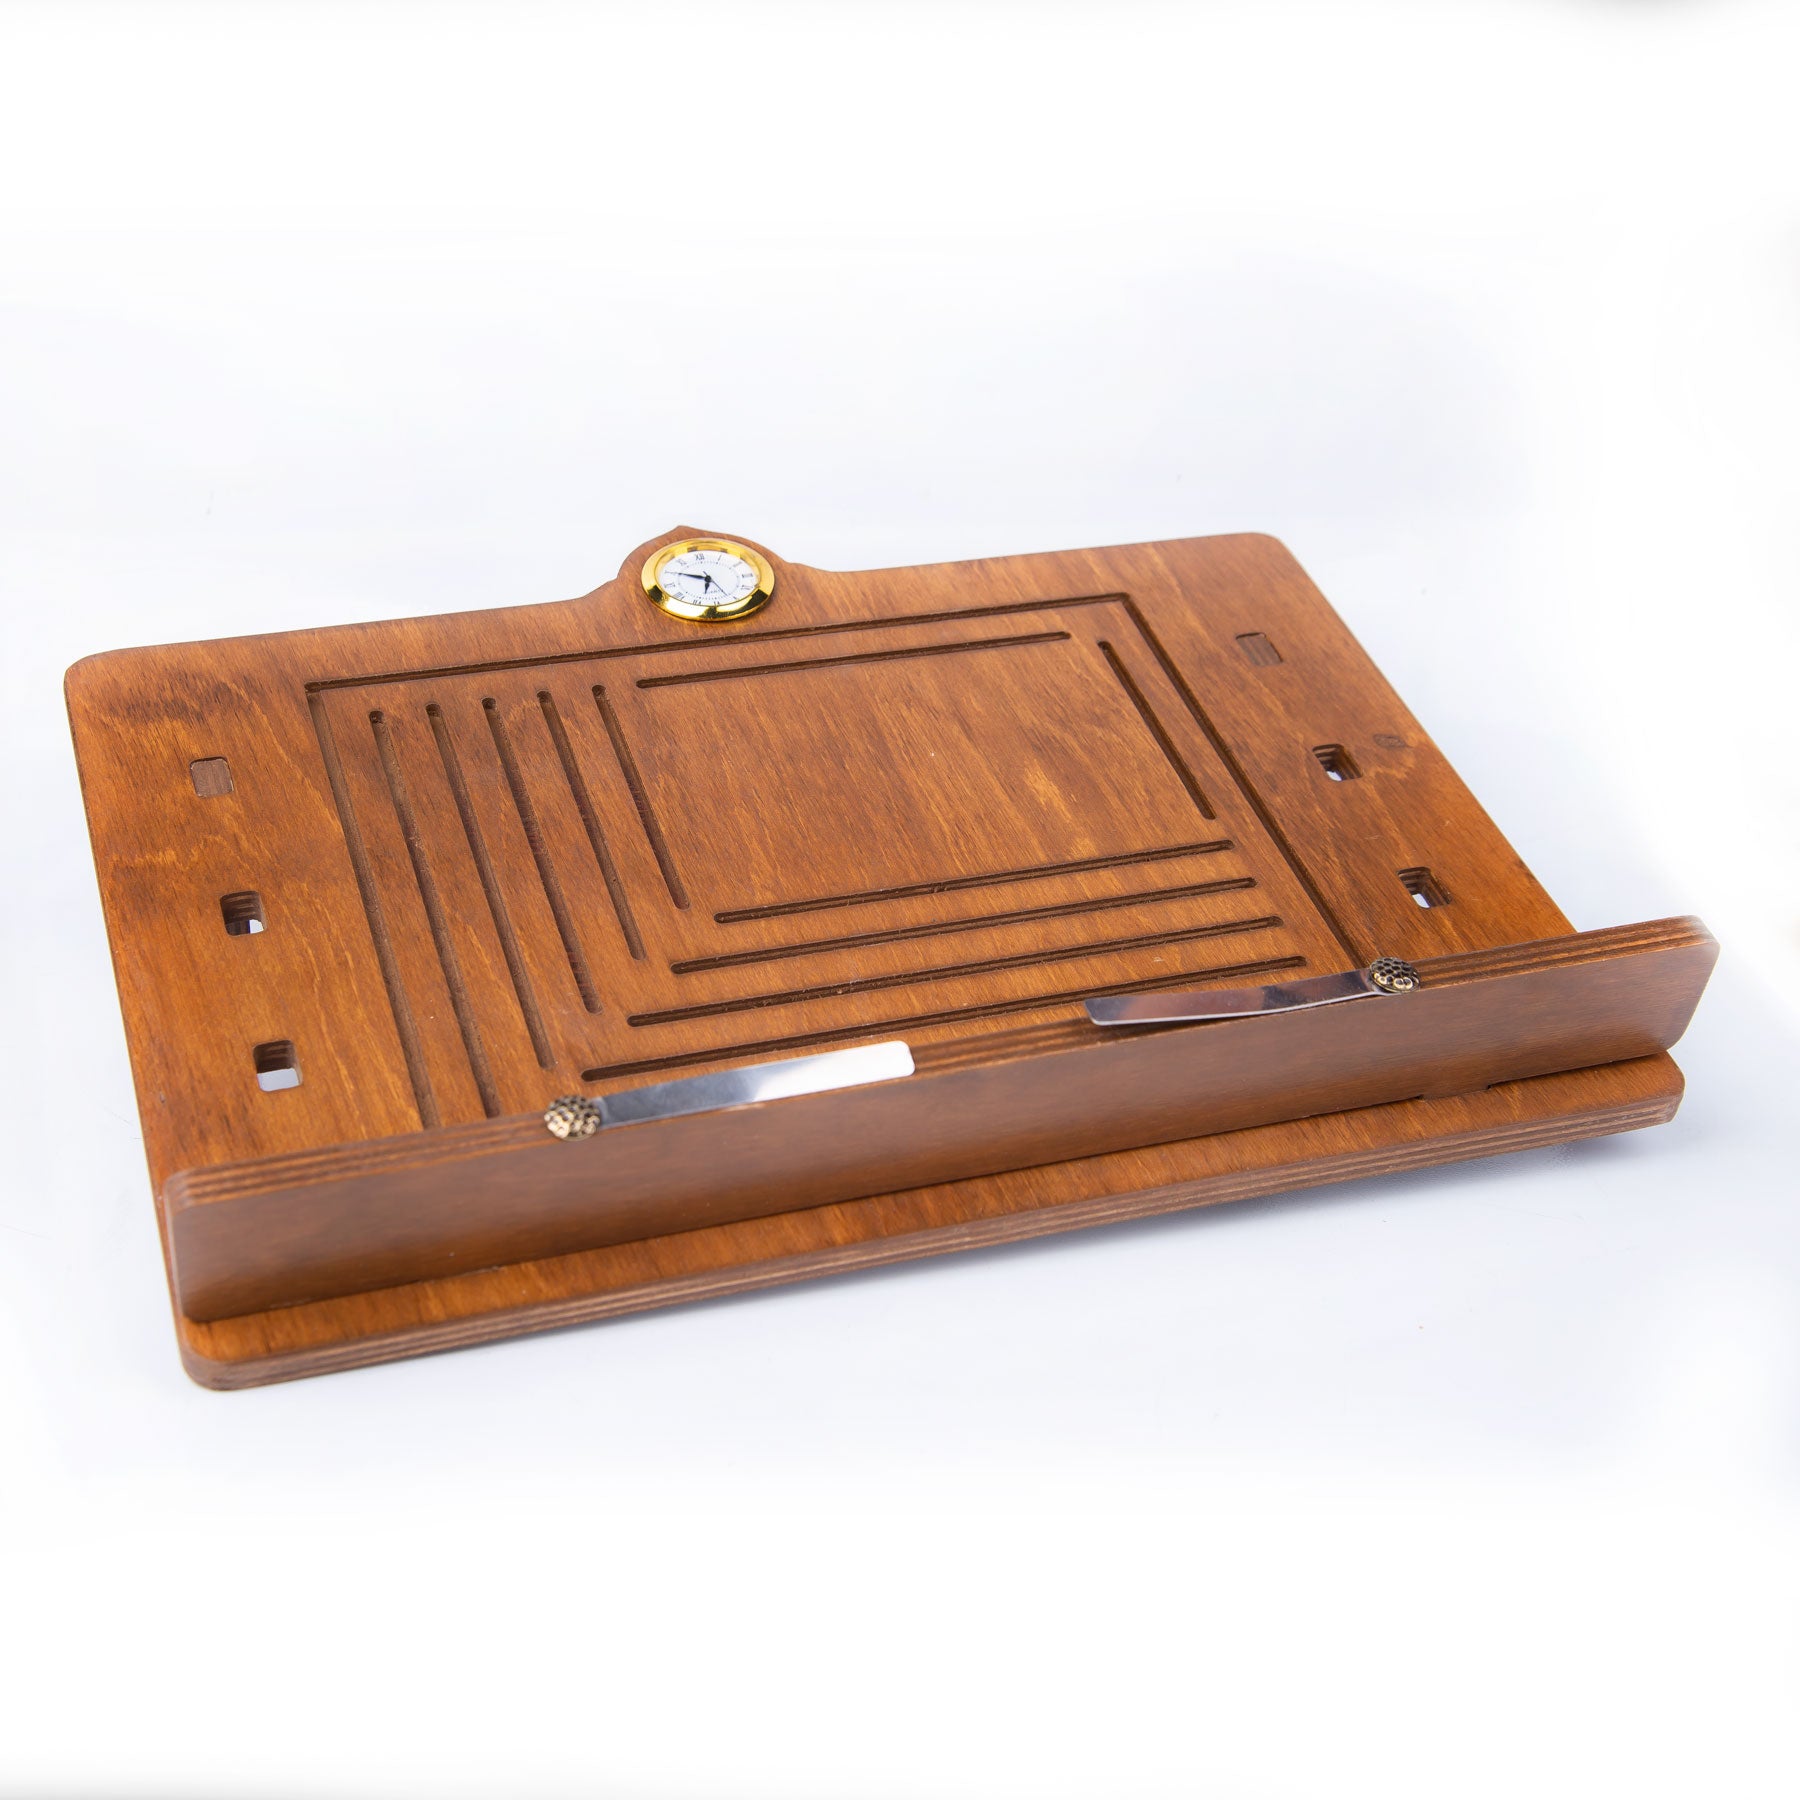 Ve Tesbih Adjustable Wooden Quran Stand with Clock 1